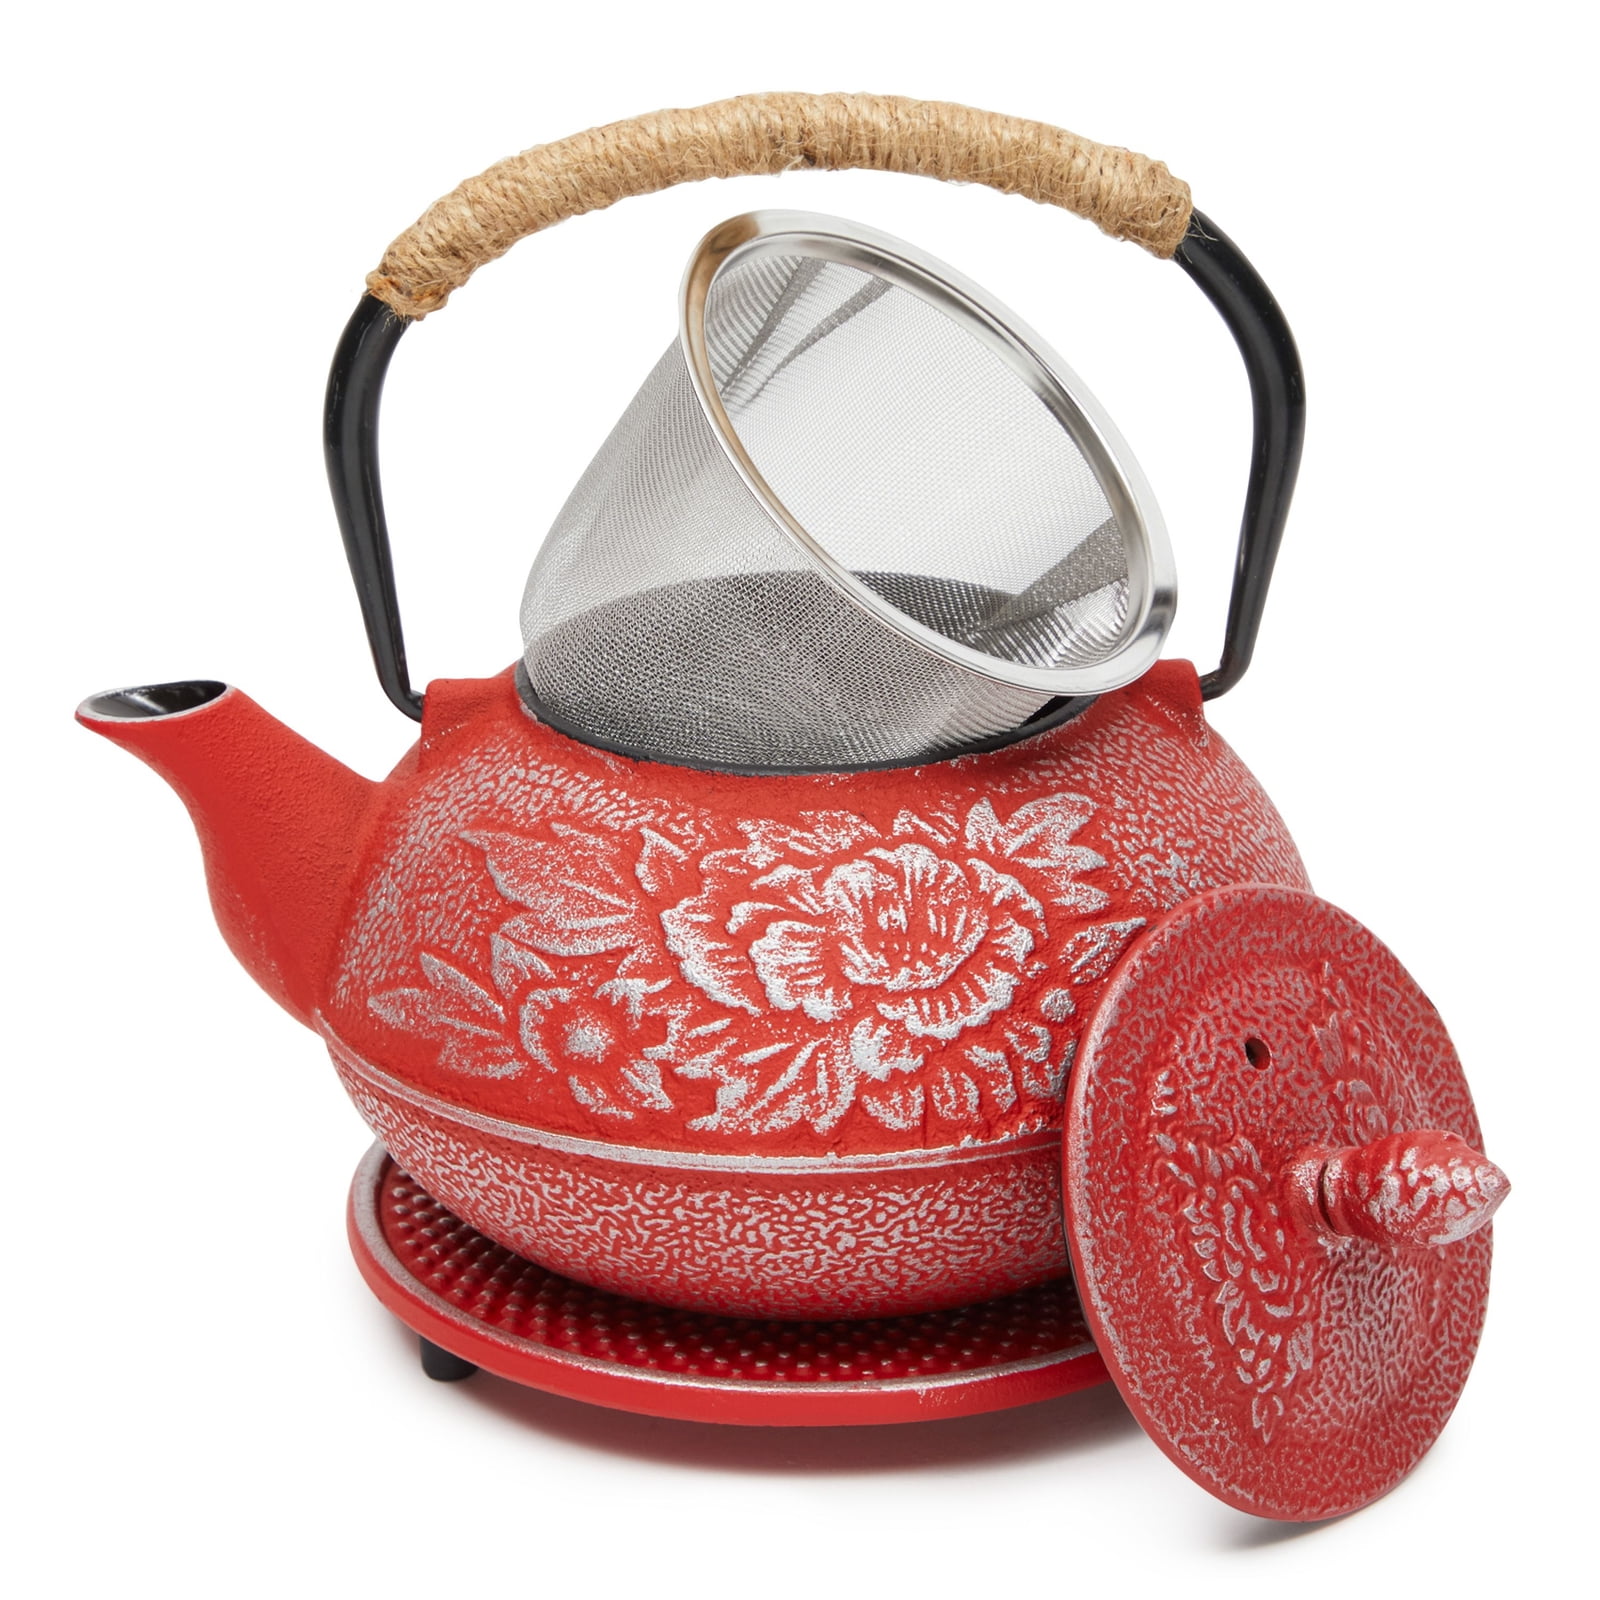 Matte Grey Japanese Tea Set with Infuser for Loose Tea 27 Ounce Modern Porcelain Tea Pot with 2 Teacups & Rattan Coasters for Women Gift ZENS Ceramic Teapot Set 